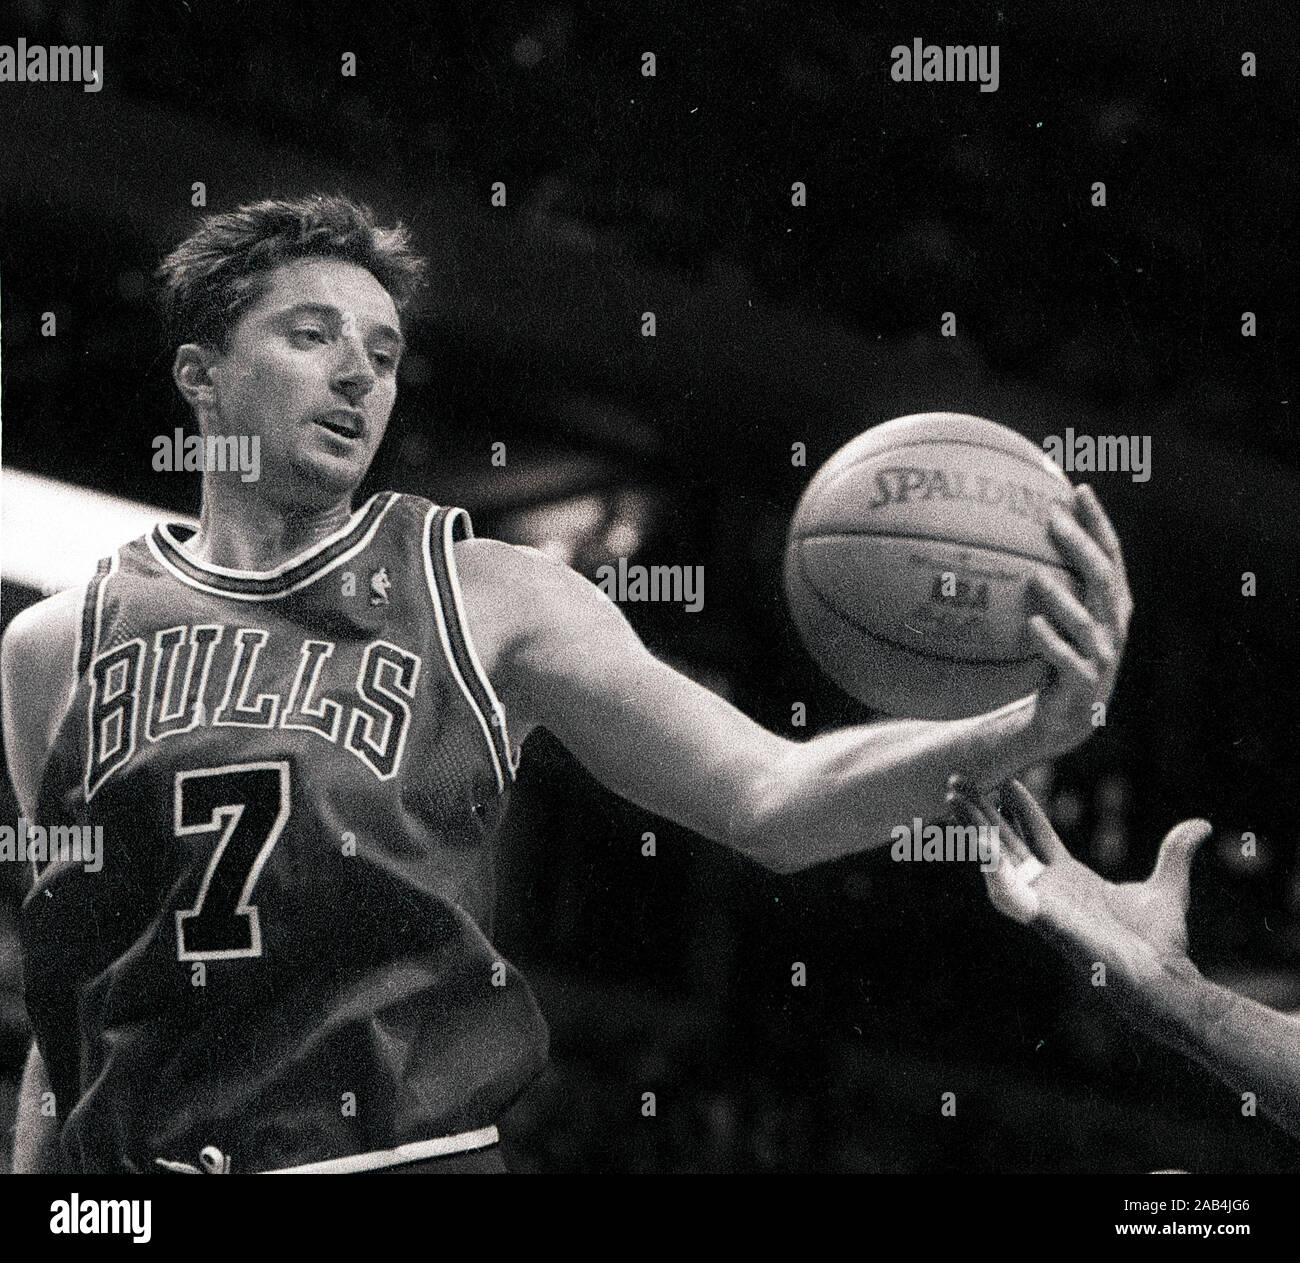 Chicago Bulls Toni Kukoč packt den Rückstoß in Basketball Spiel gegen die Boston Celtics im Fleet Center in Boston, Ma USA 1997 Foto von Bill belknap Stockfoto